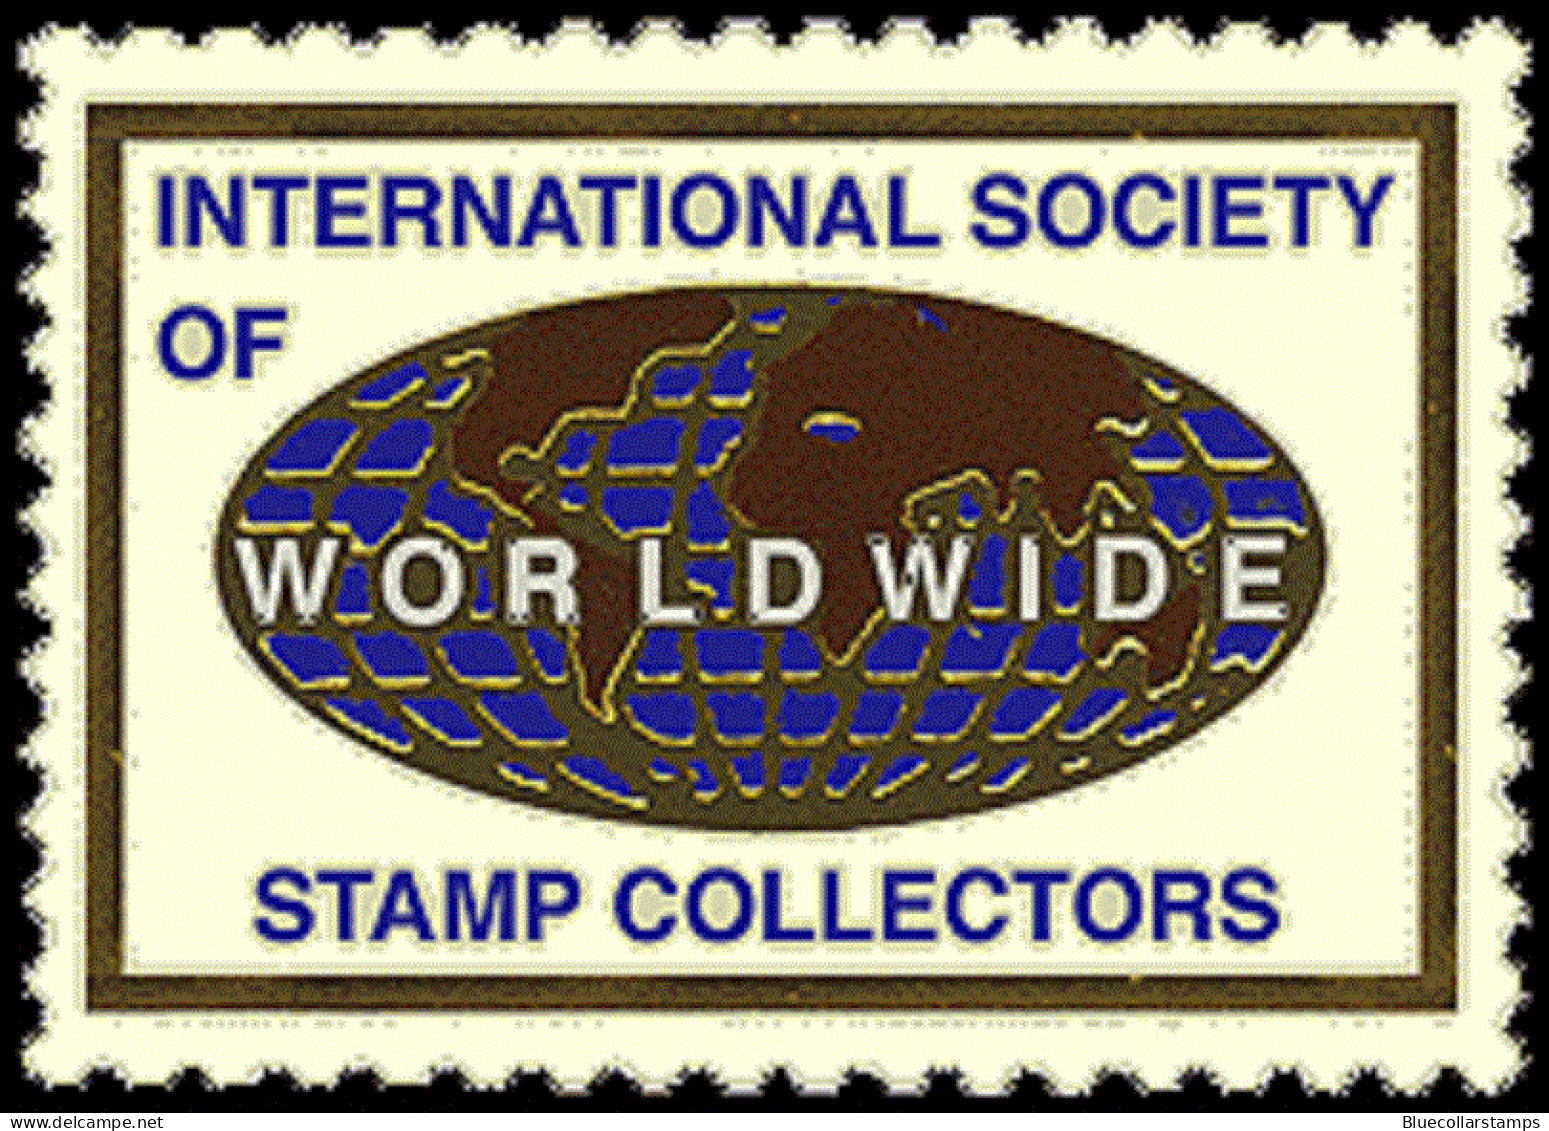 Persia, Stamp, Scott#543, Mint, Hinged, 1ch, Orange - Irán